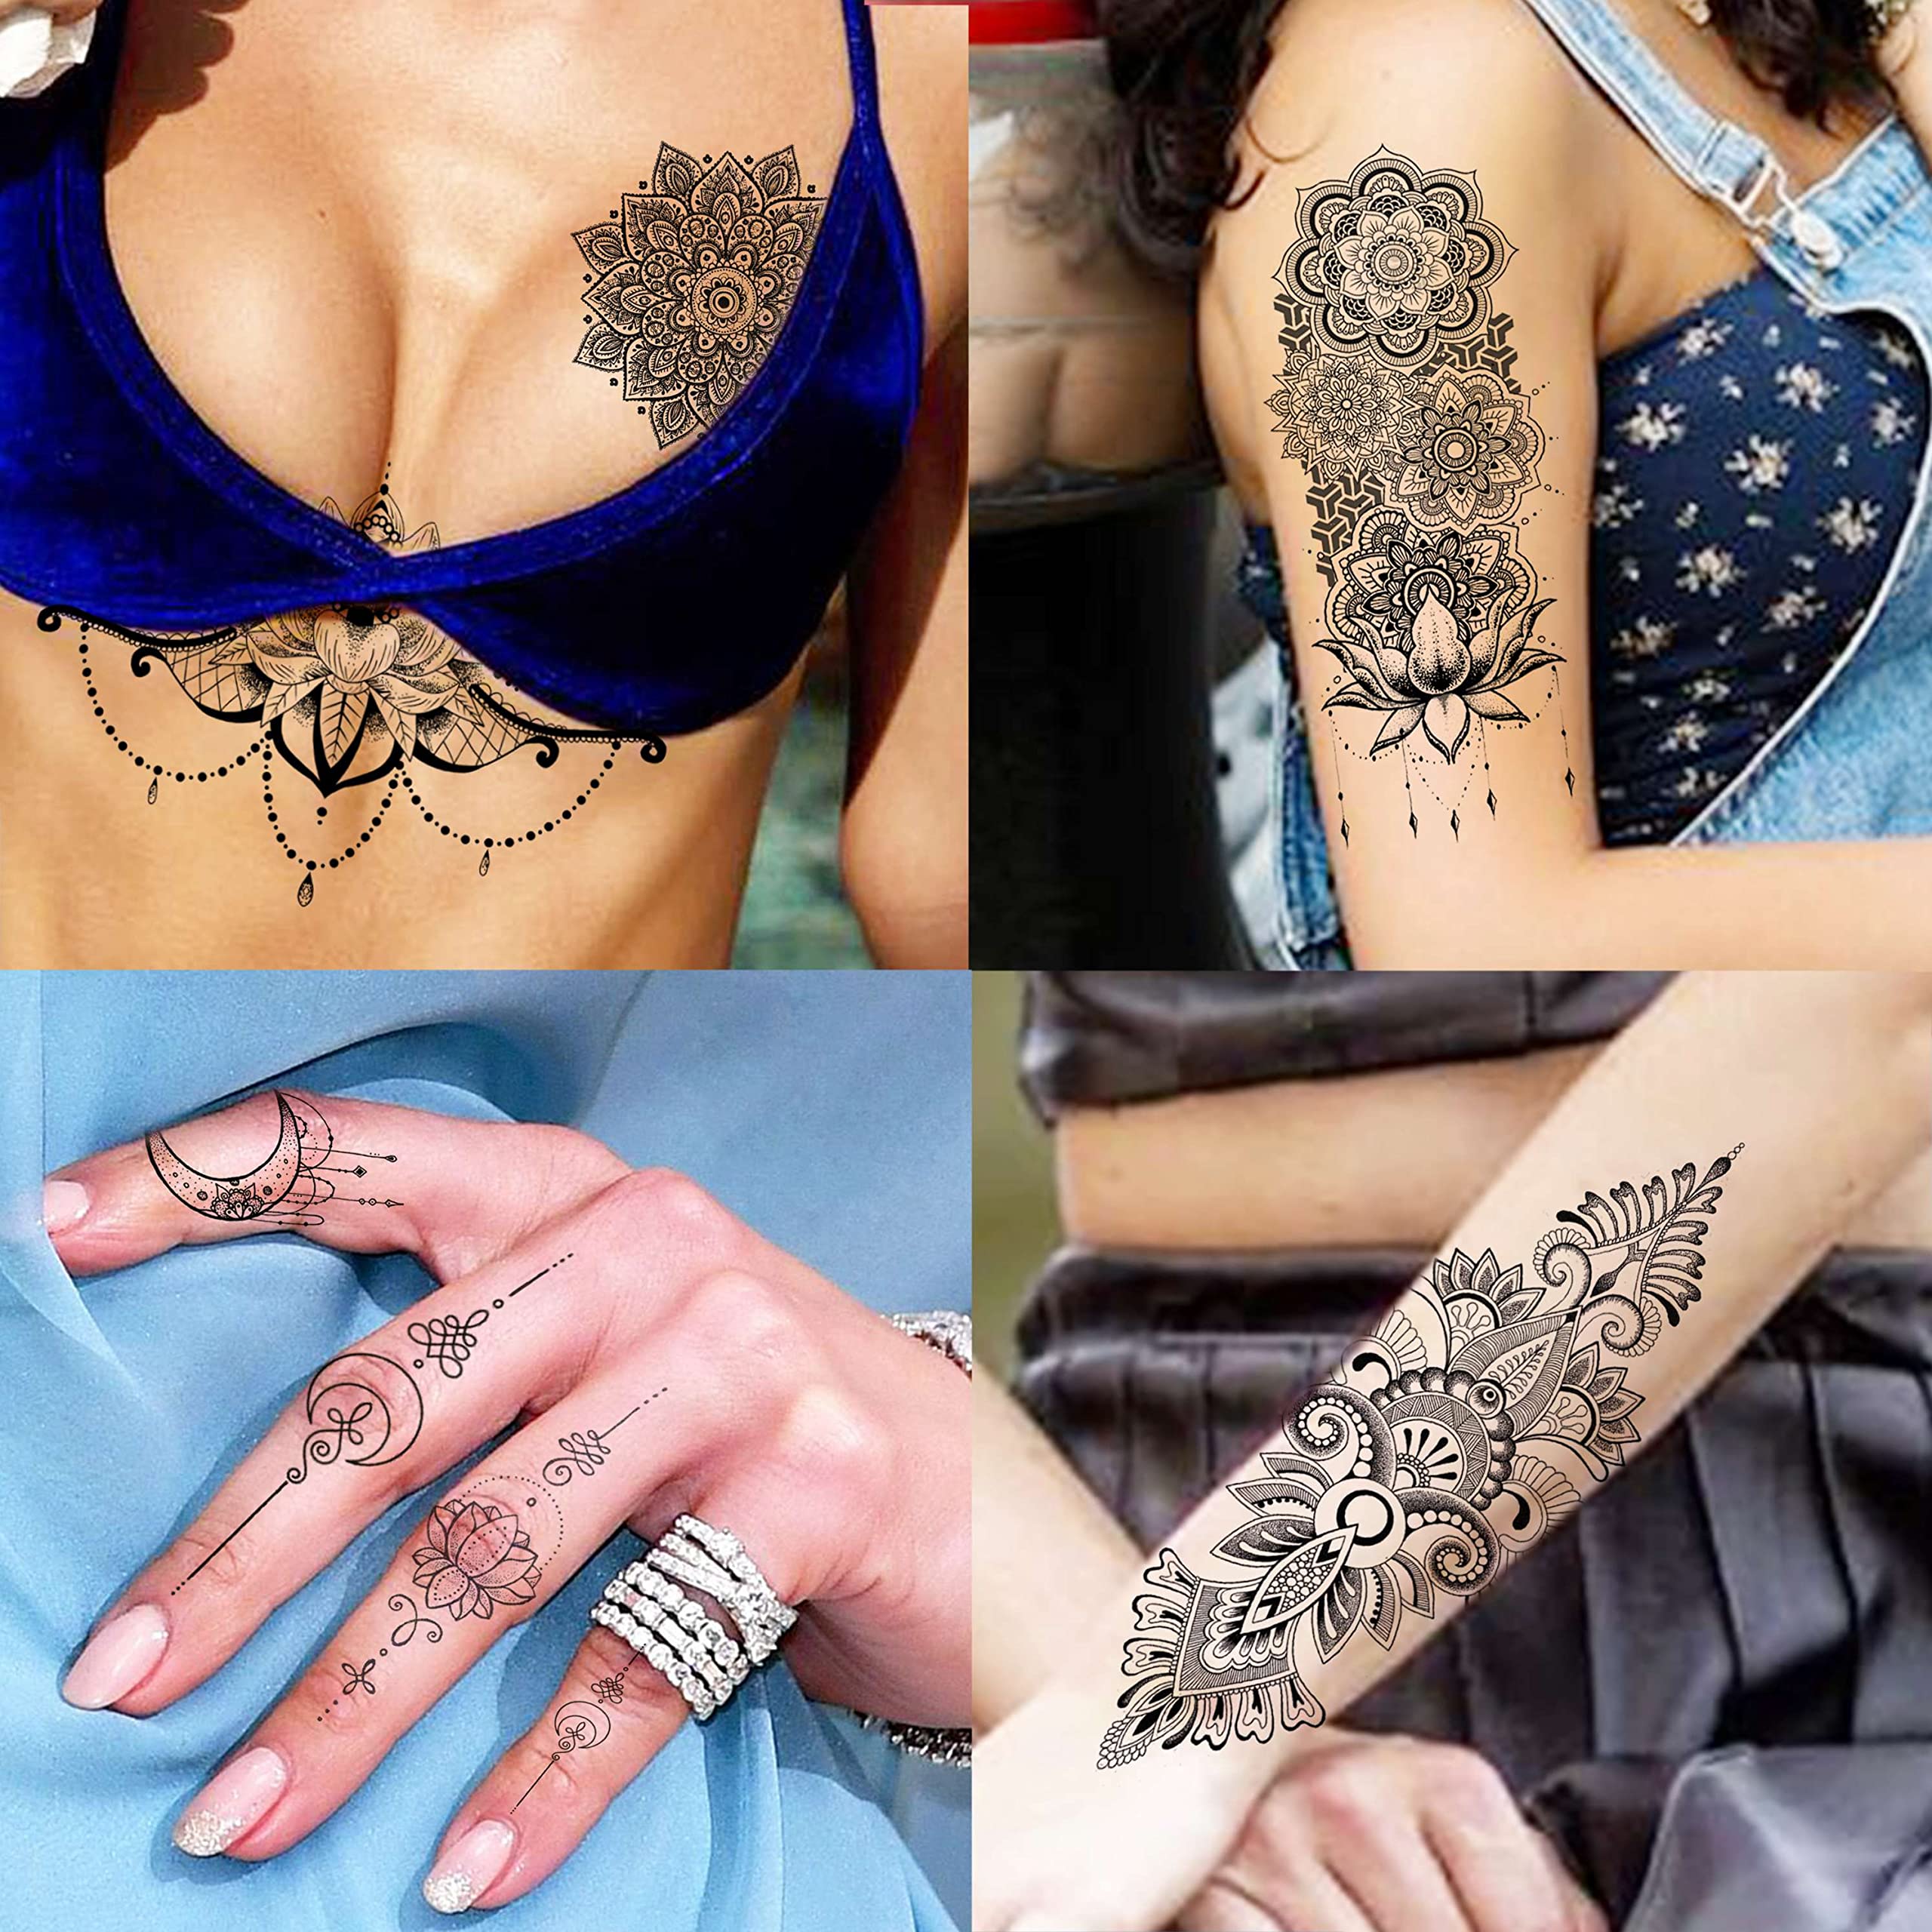 COKTAK 6 Pieces/Lot Unique Black Henna Temporary Tattoo Stickers For Adults Women Girls Feather Mandala Flower Body Art Large Big Arm Tattoos Sheet Lace Indian Mehndi Sexy Wedding Tatoos OWL